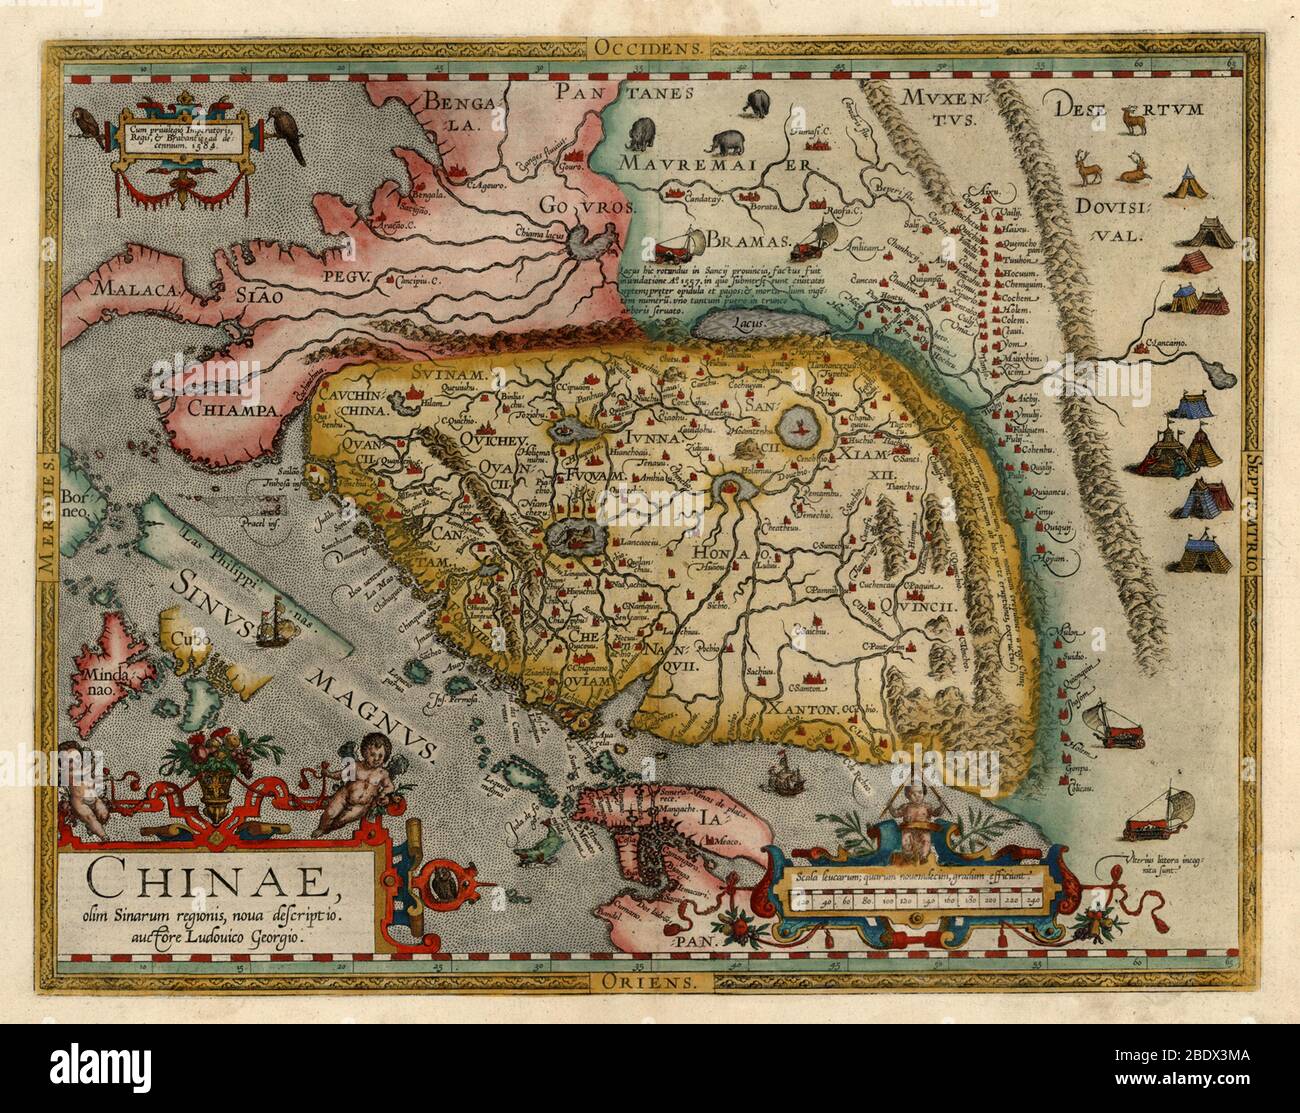 Luiz Jorge de Barbuda, China Map, 1584 Stock Photo